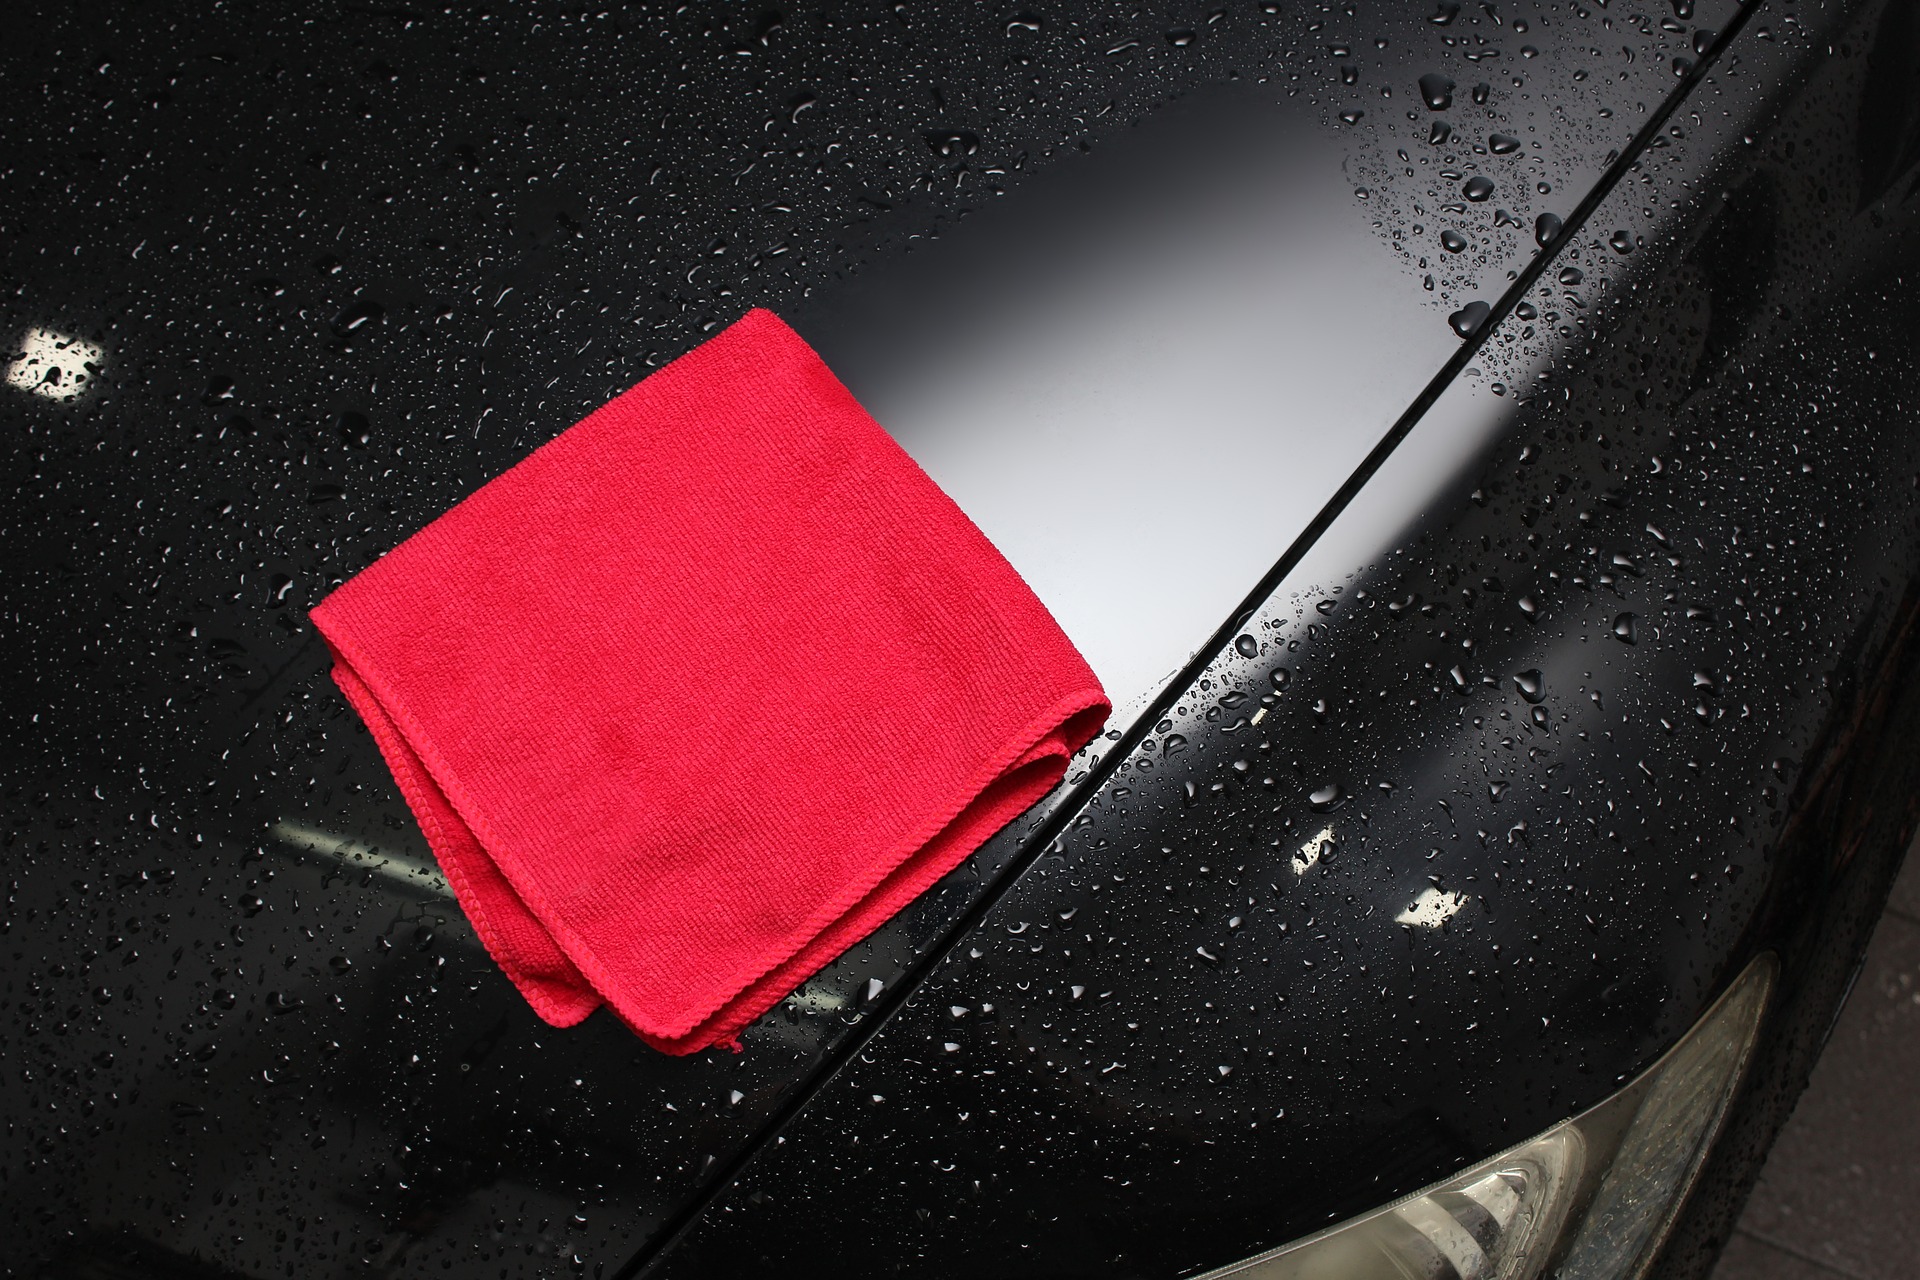 Red towel drying a wet black car Decatur Autowash good wash